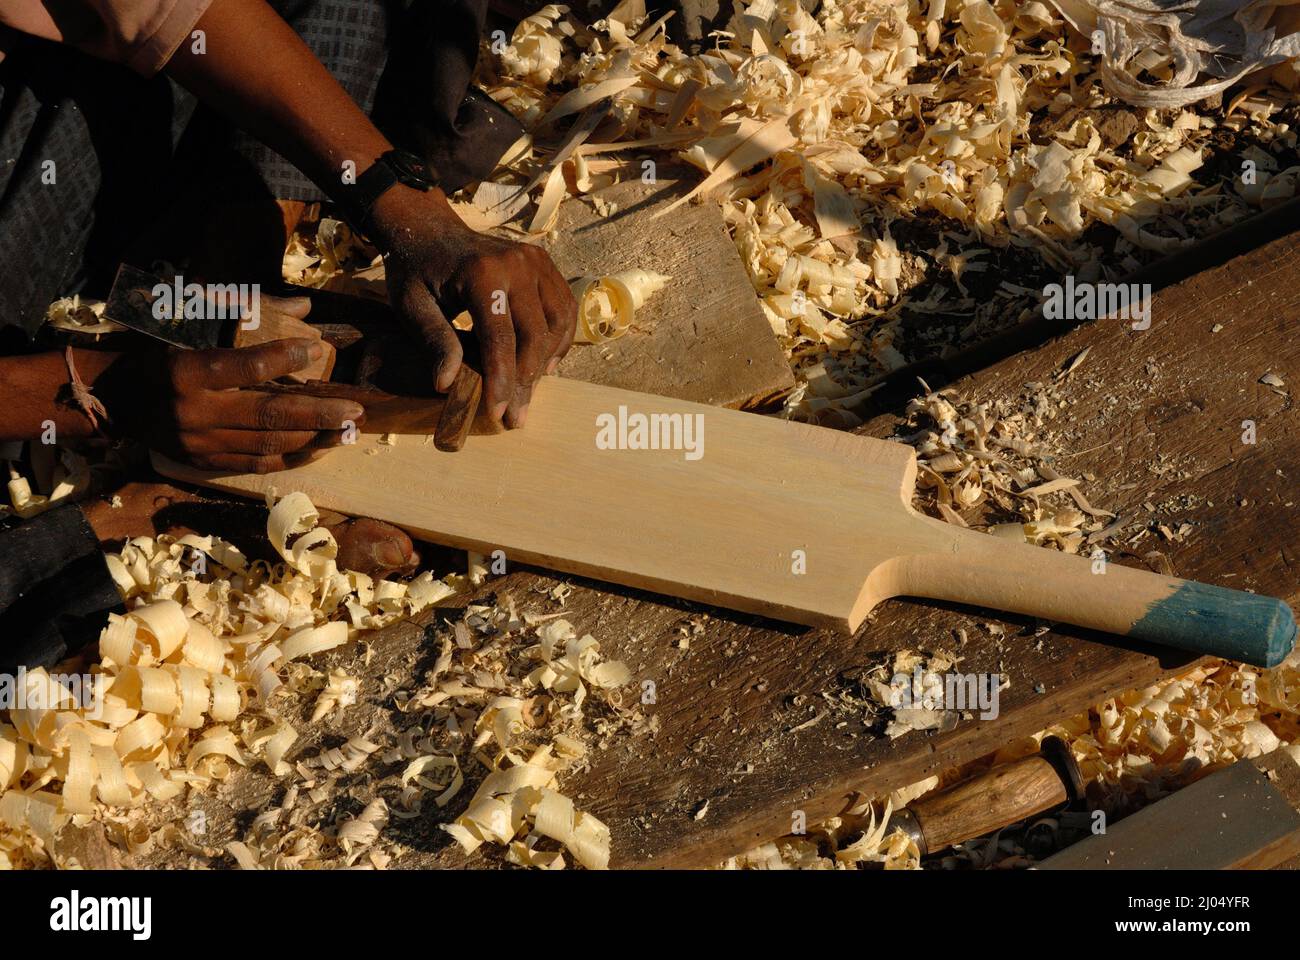 Nashik, Maharashtra, India, Asia, Dec. 09, 2006 - Indian man carpanter making A generic wooden cricket bat in work shop Stock Photo